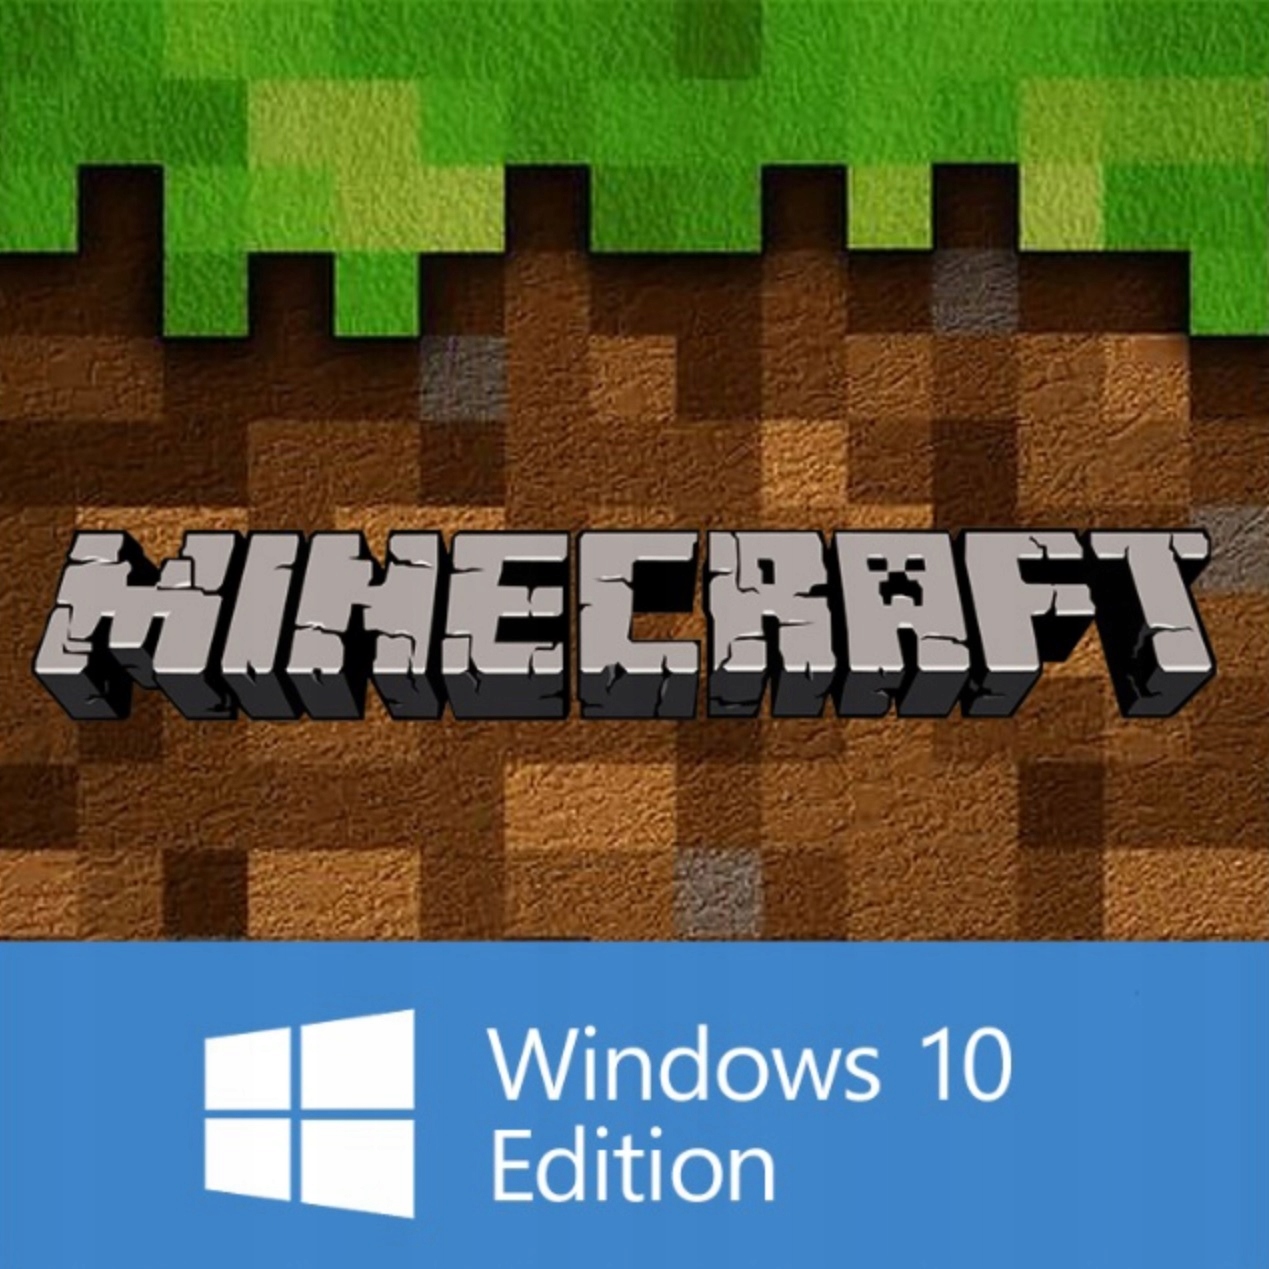 Купить майнкрафт 10. Minecraft Windows 10 Edition. Значок МАЙНКРАФТА. Майнкрафт виндовс 10. Майнкрафт виндовс 10 эдишн.